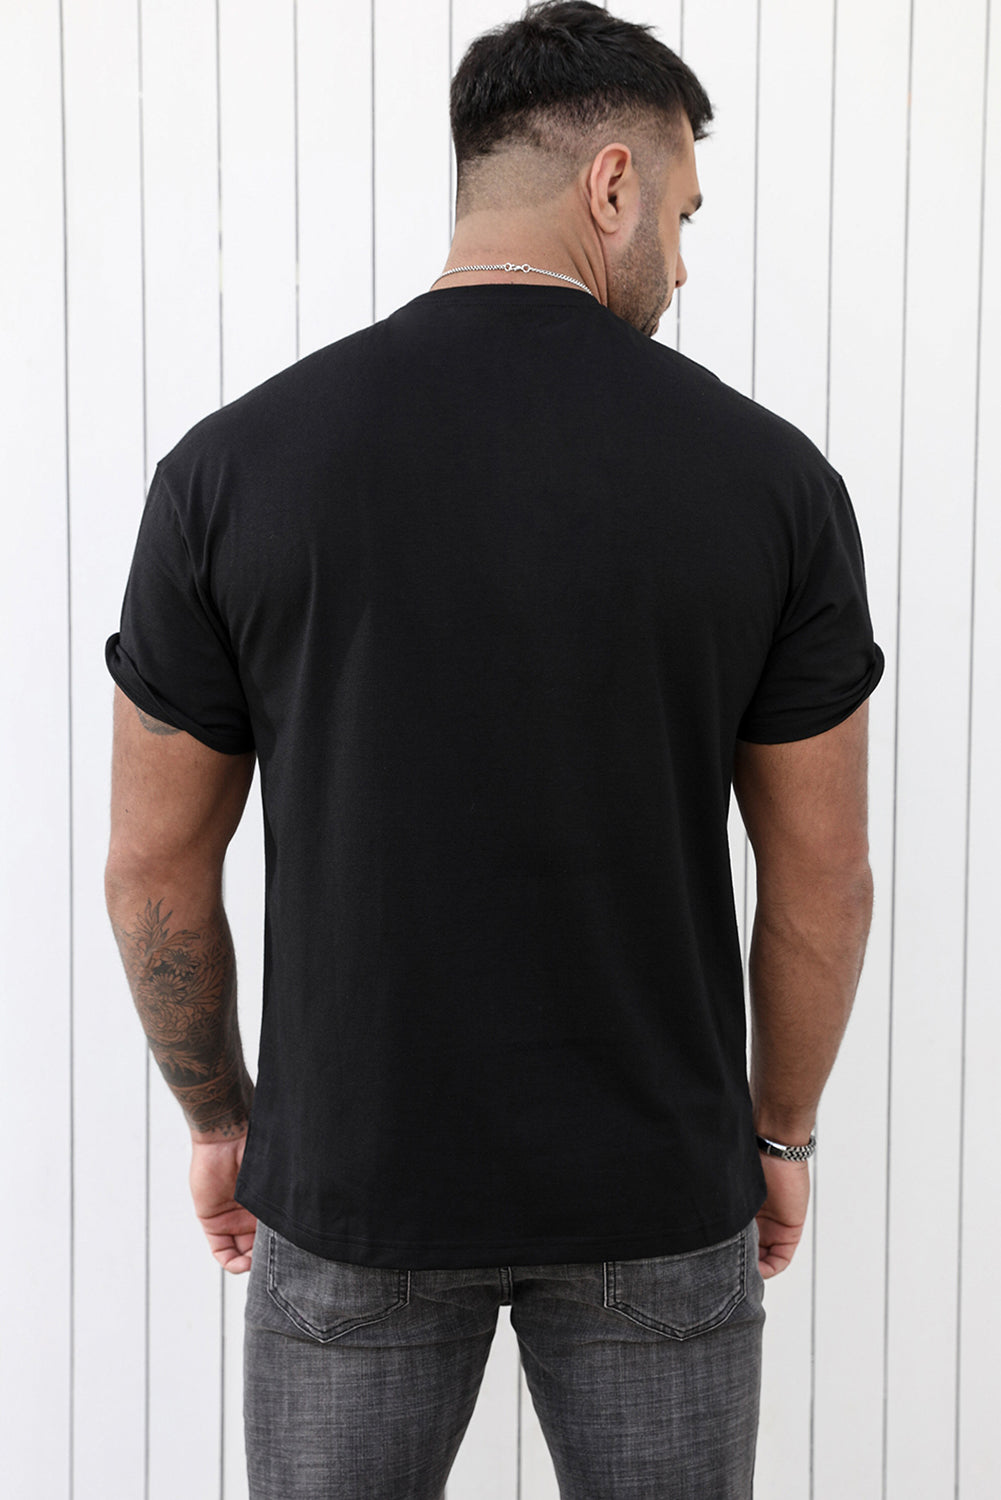 CRAYONS Letter Print O-neck Short Sleeve Men's T Shirt